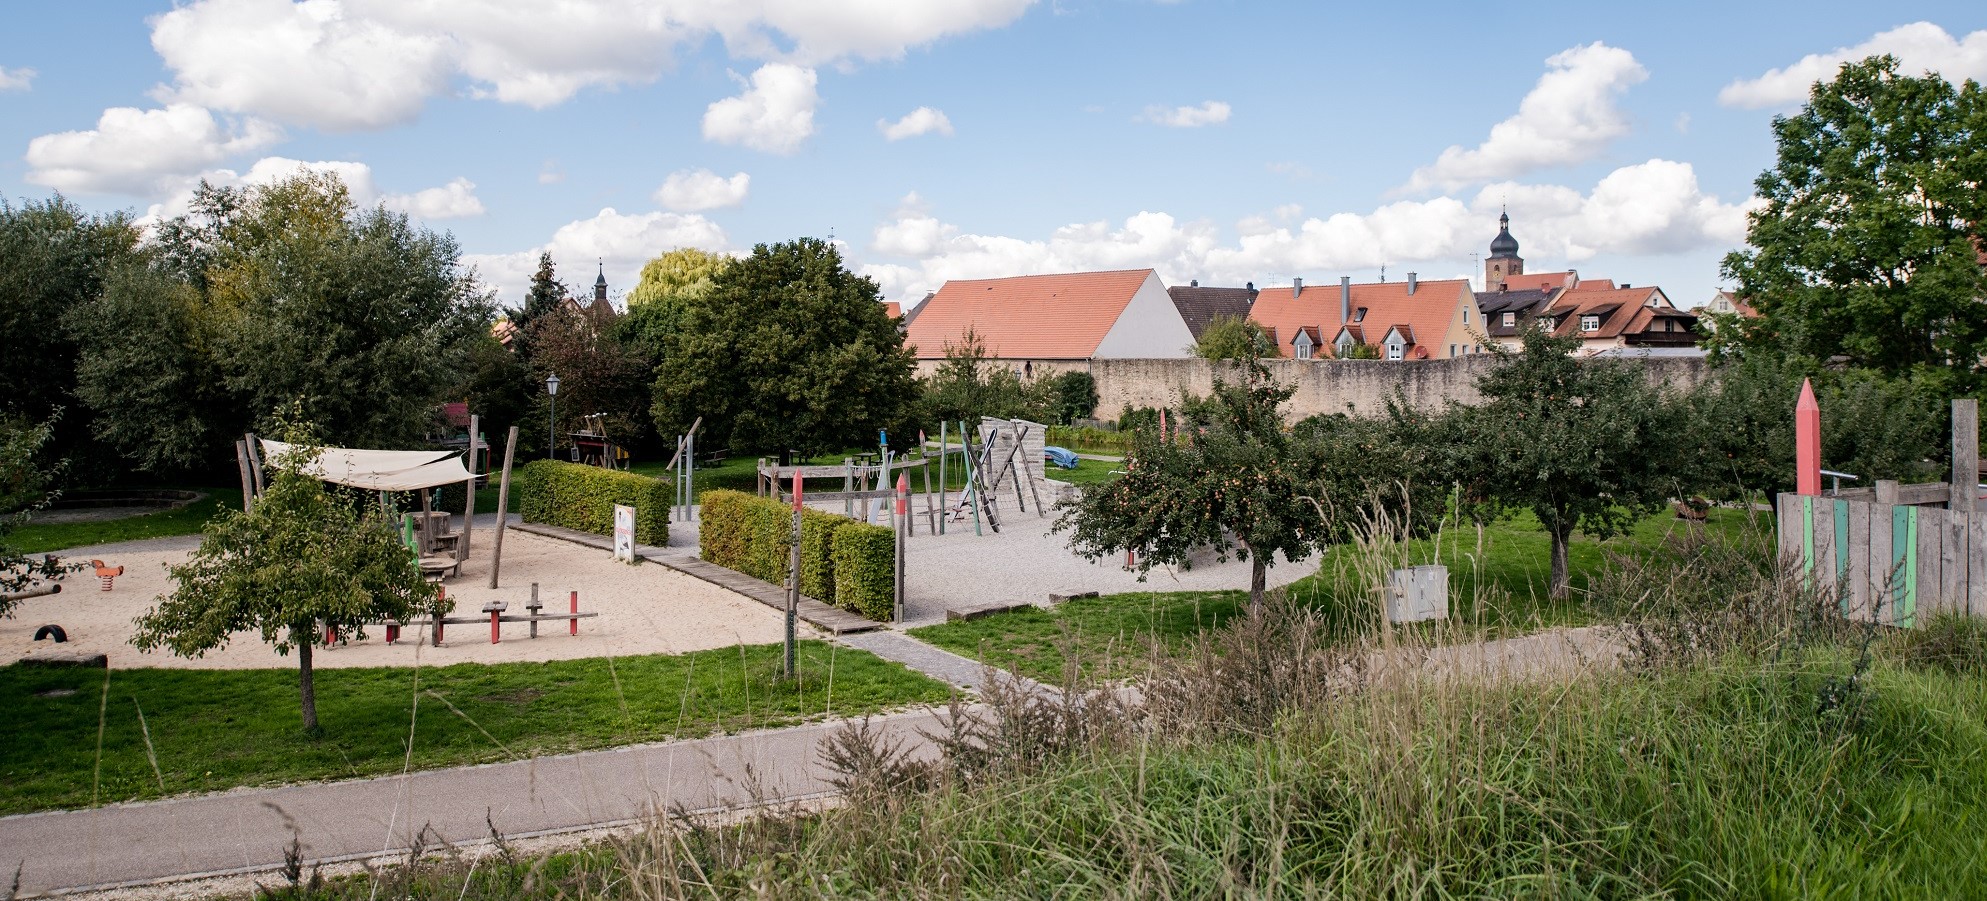 Spielplatz - Merkendorf